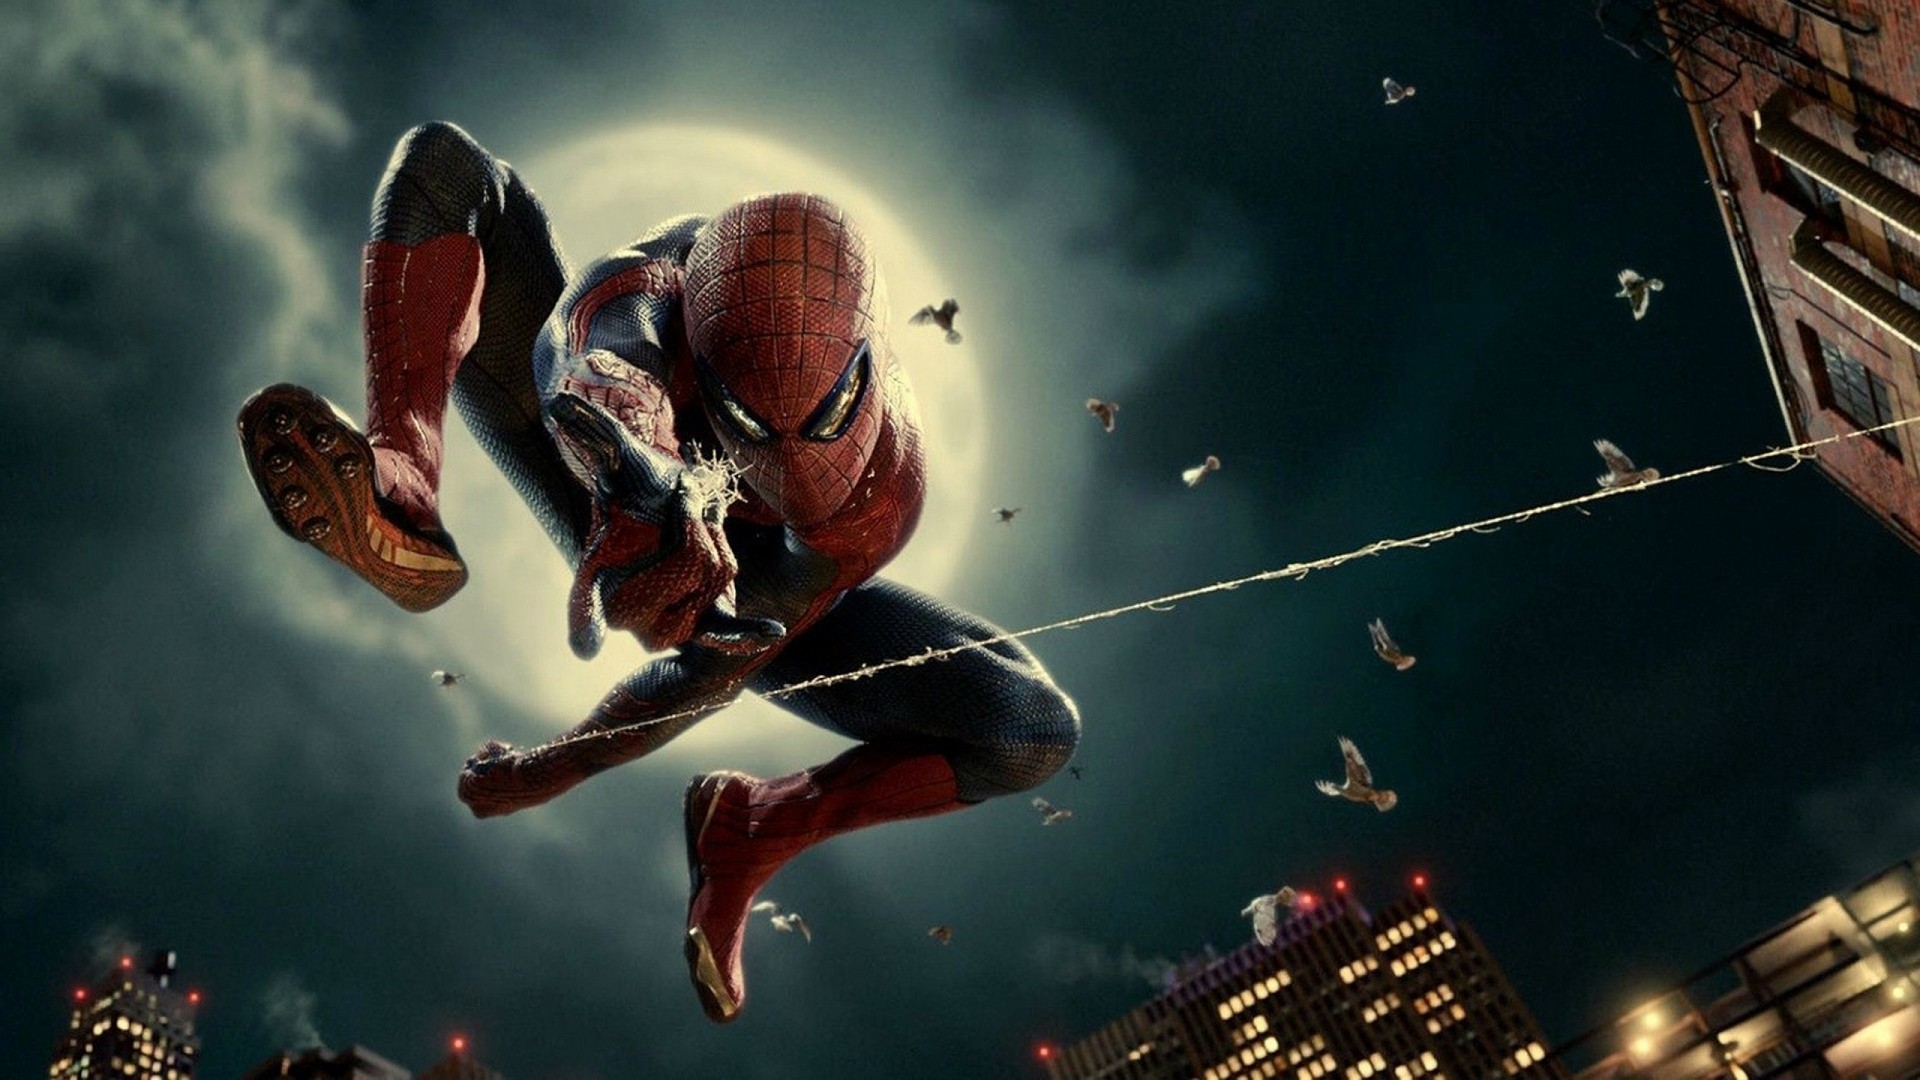 1920x1080 Spider Man HD Wallpapers 1080p - WallpaperSafari Download The Amazing ...